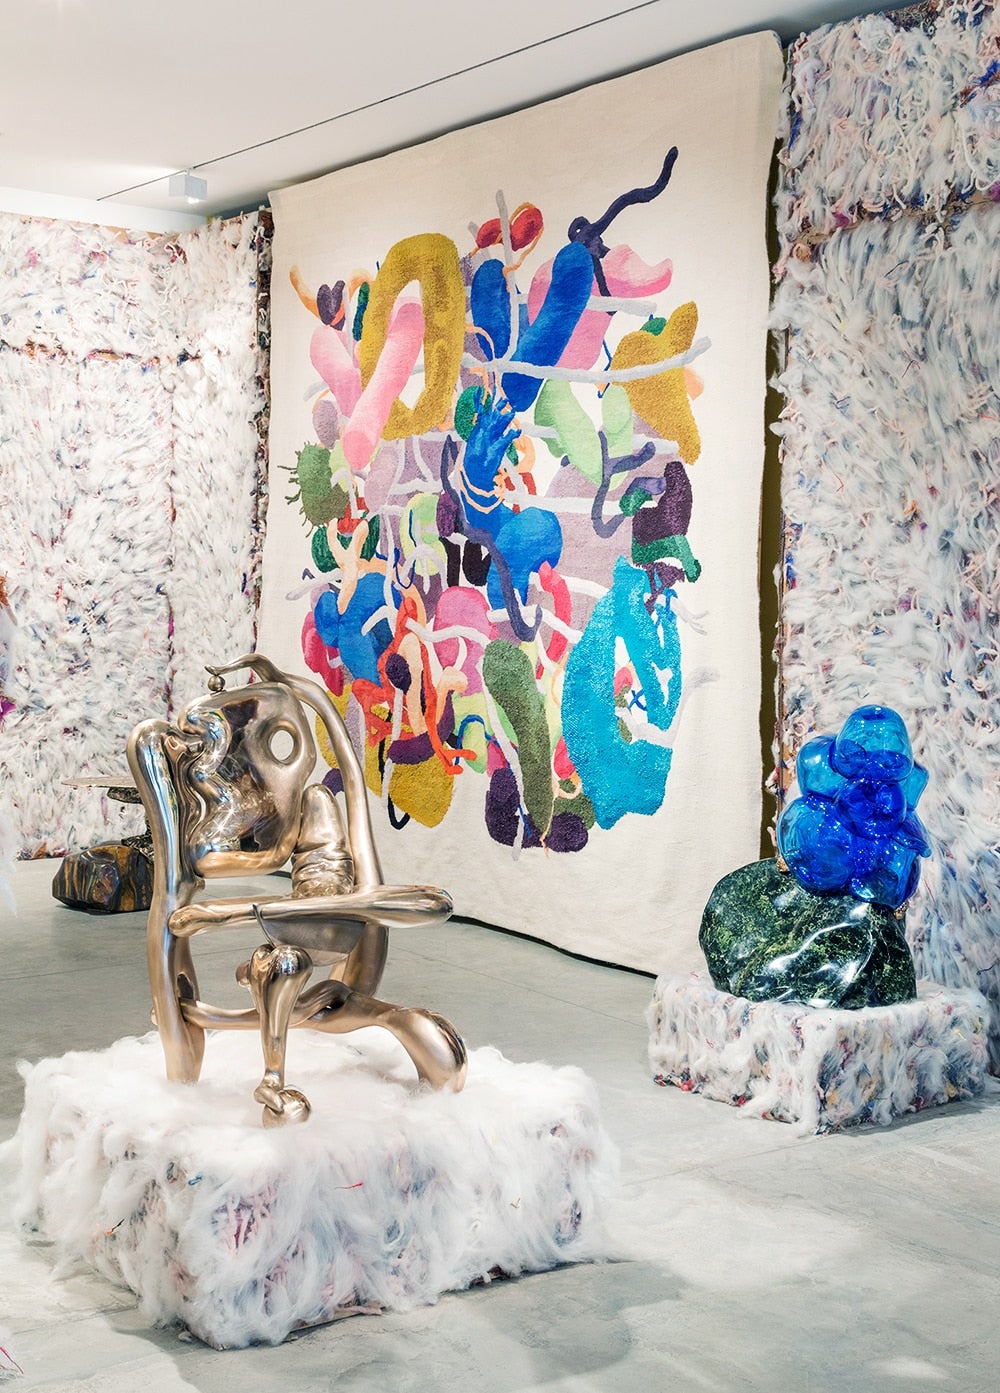 Misha Kahn’s Arty Furniture Celebrates the Goopier Side of Life